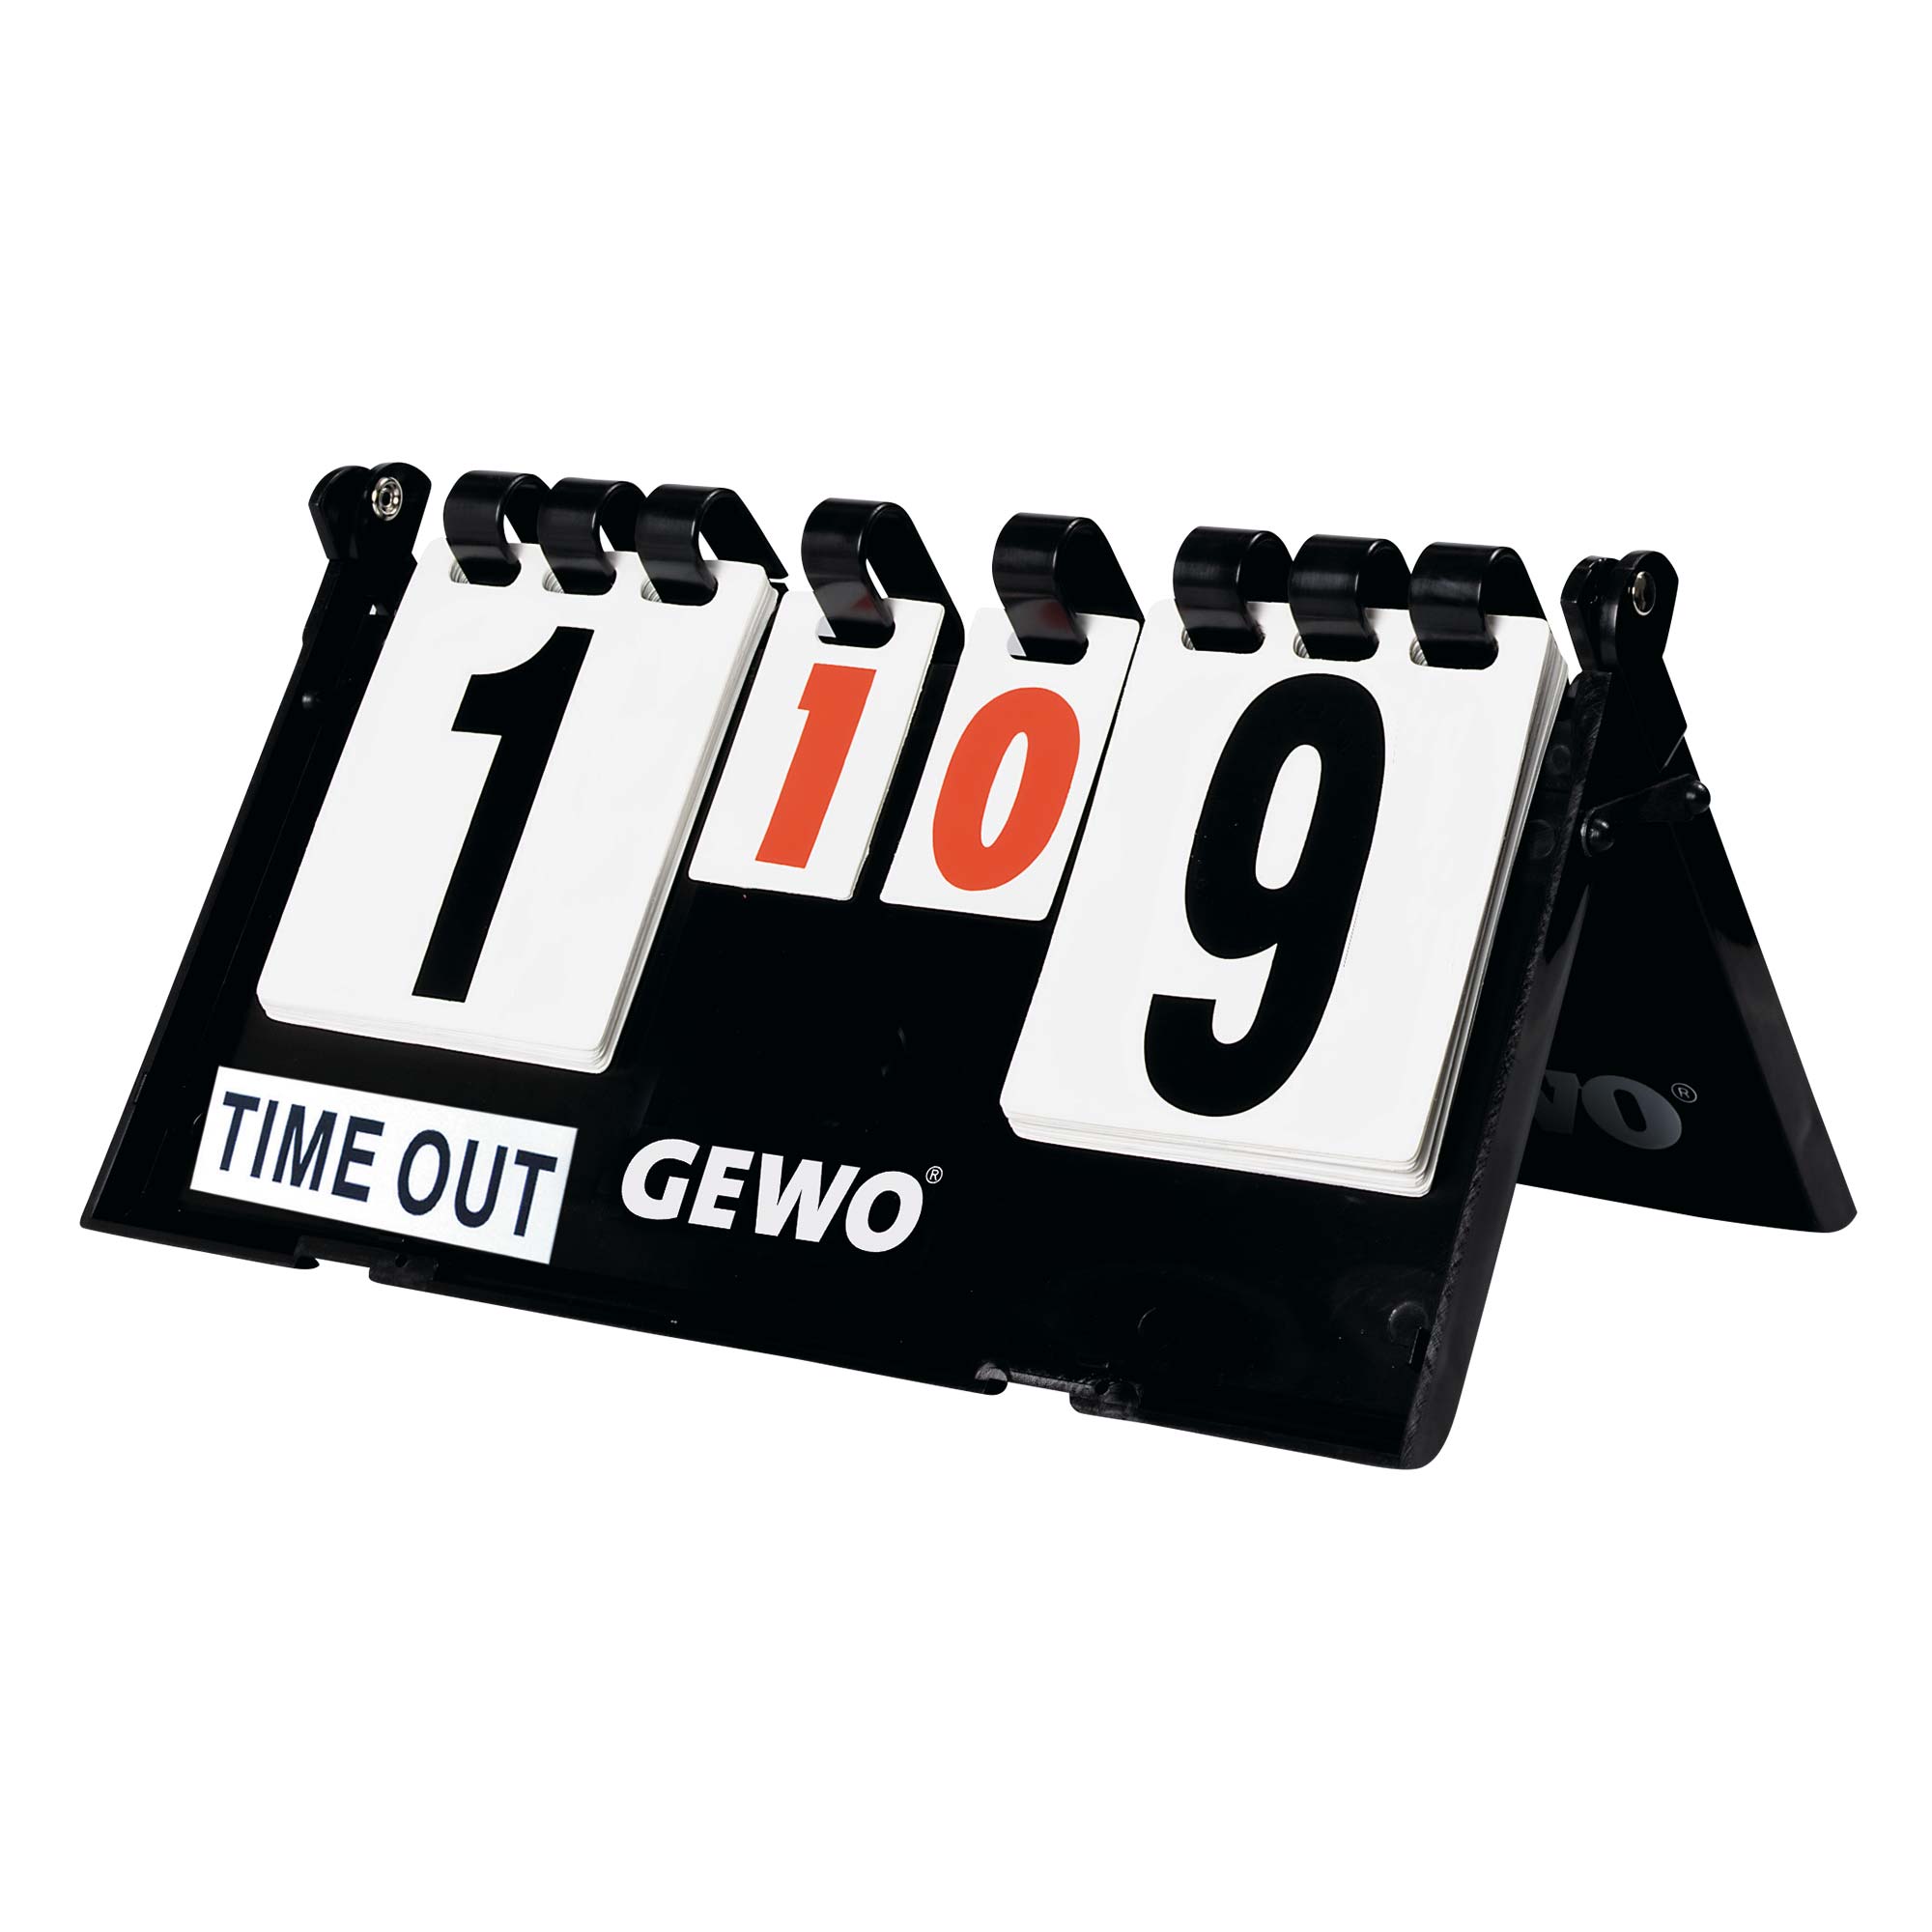 GEWO Scoreboard Compact Time Out